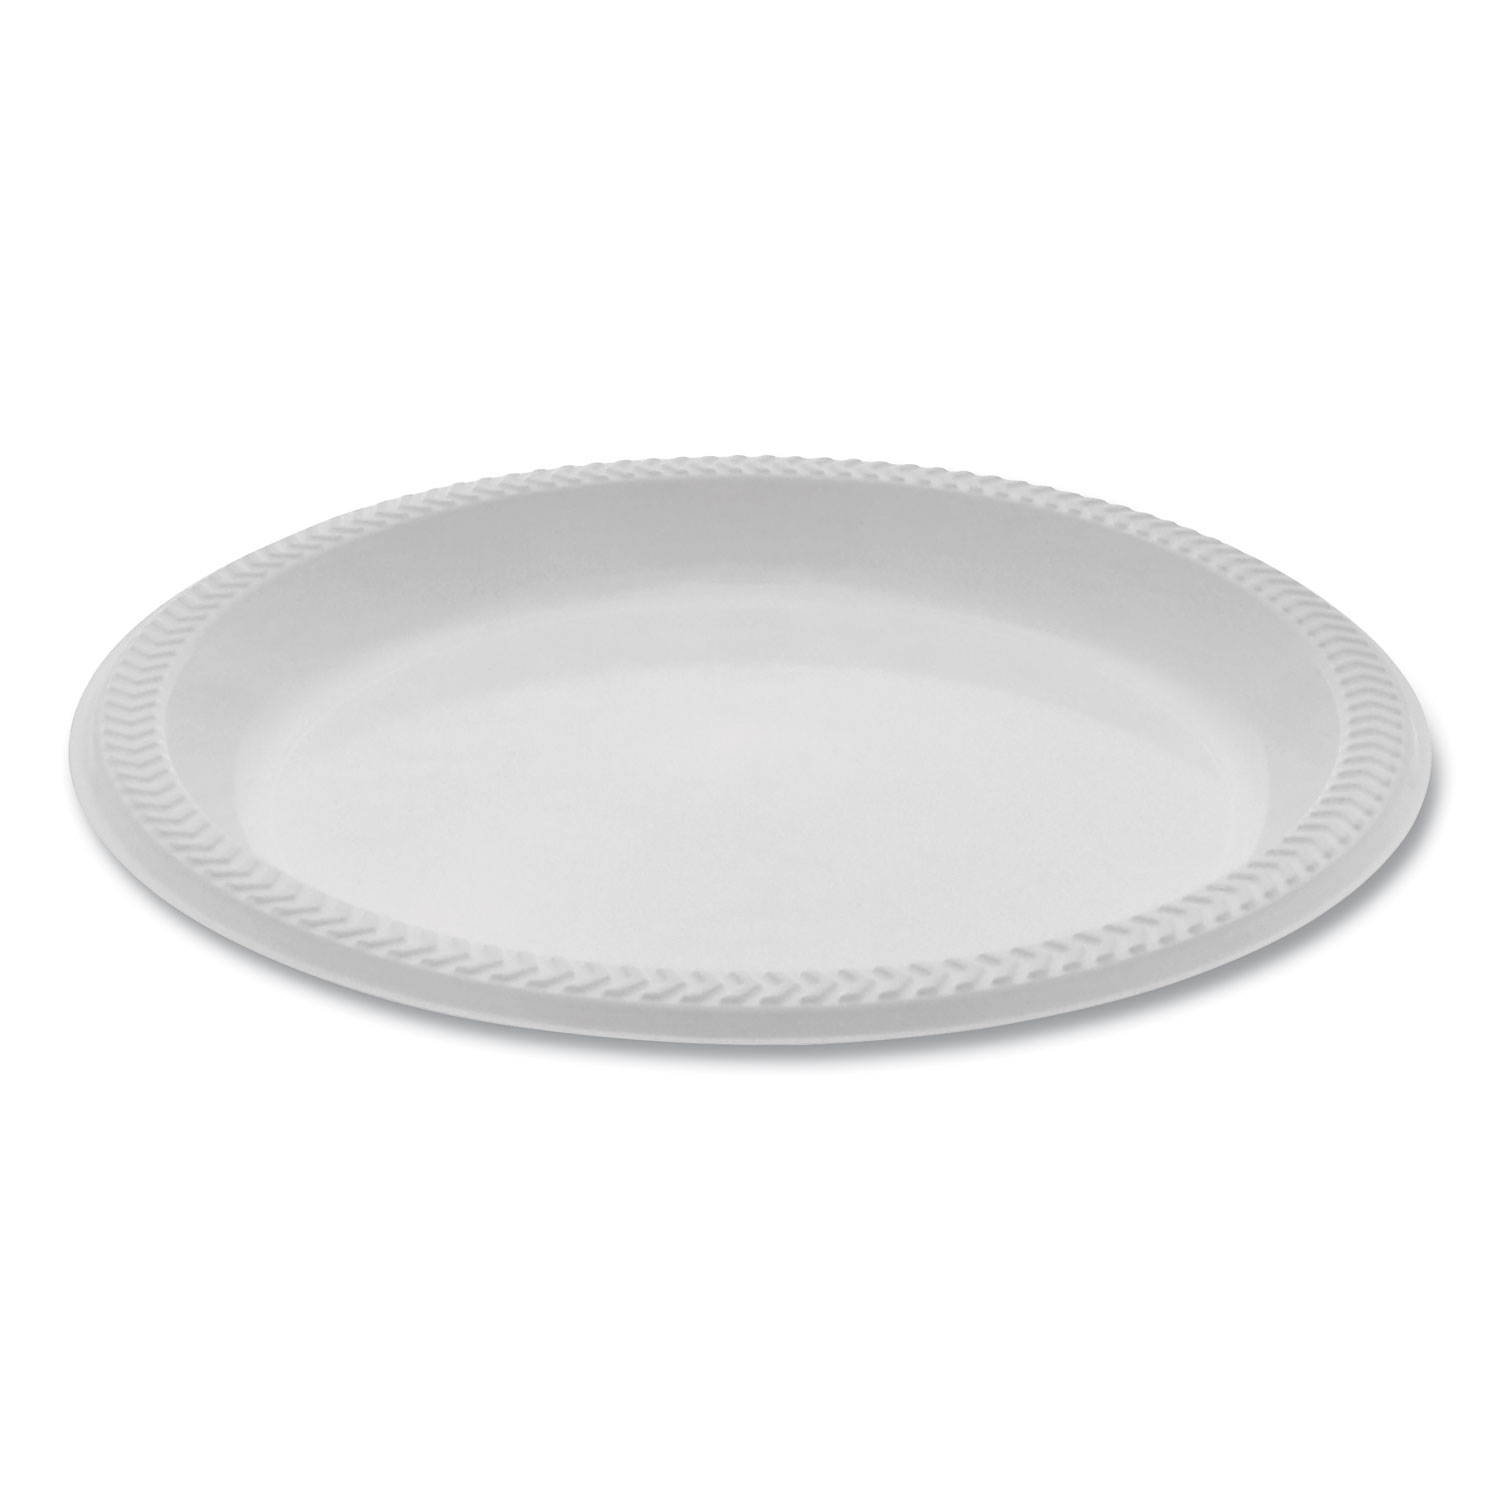  Pactiv YMI9 Meadoware OPS Dinnerware, Plate, 8.88 Diameter, White, 400/Carton (PCTYMI9) 